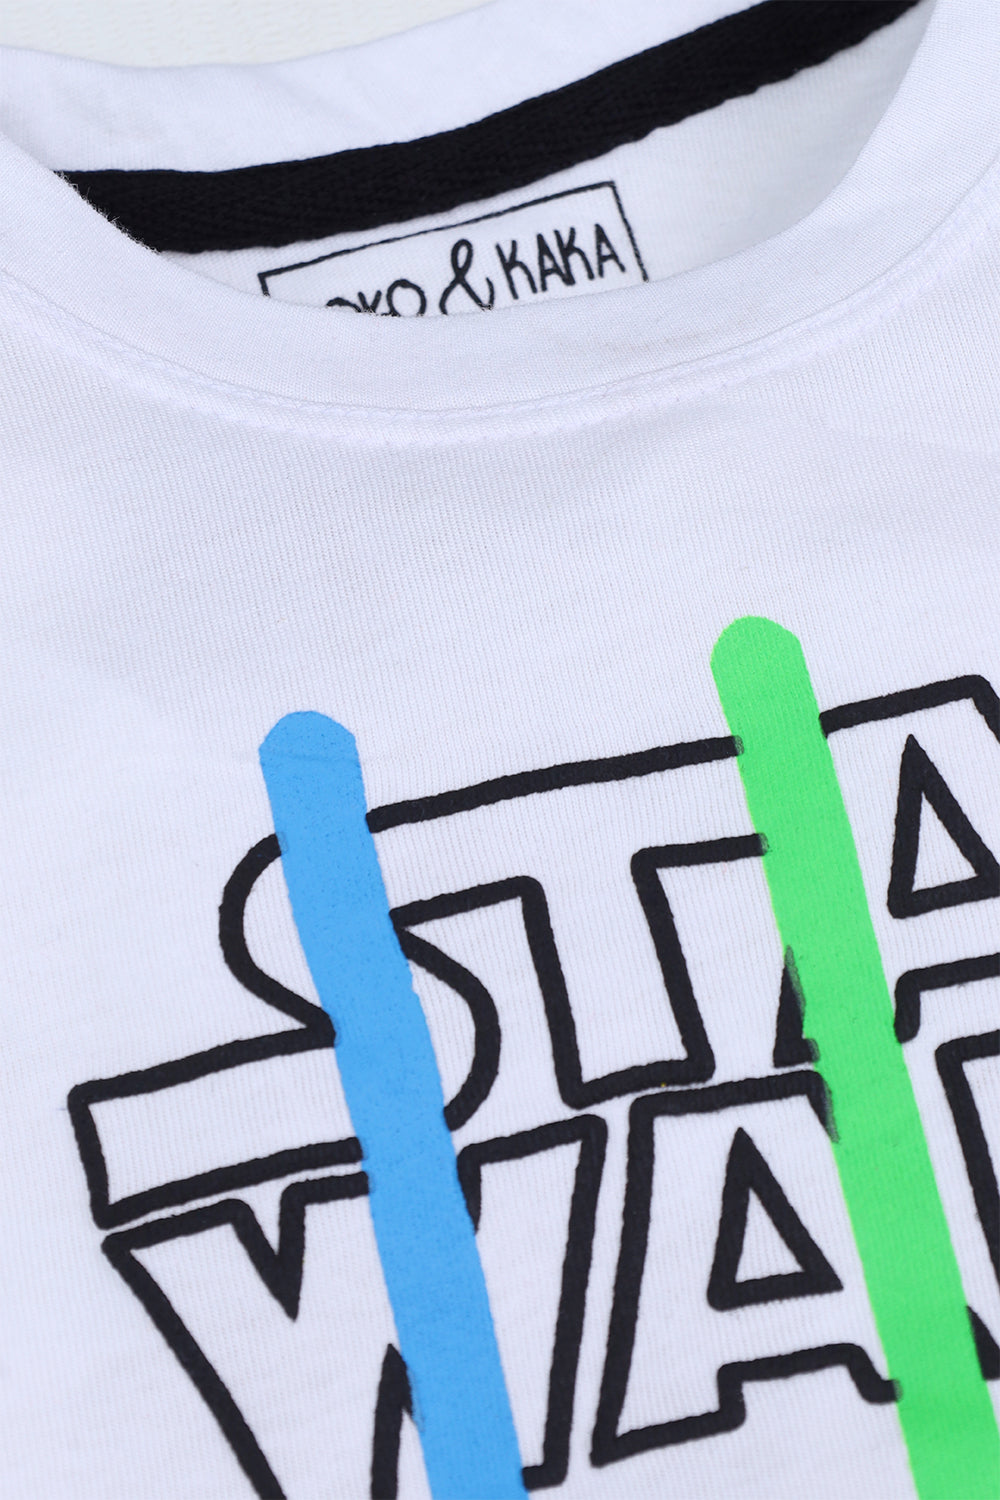 Star wars HD print graphic T-shirt 100% cotton jersey fabric